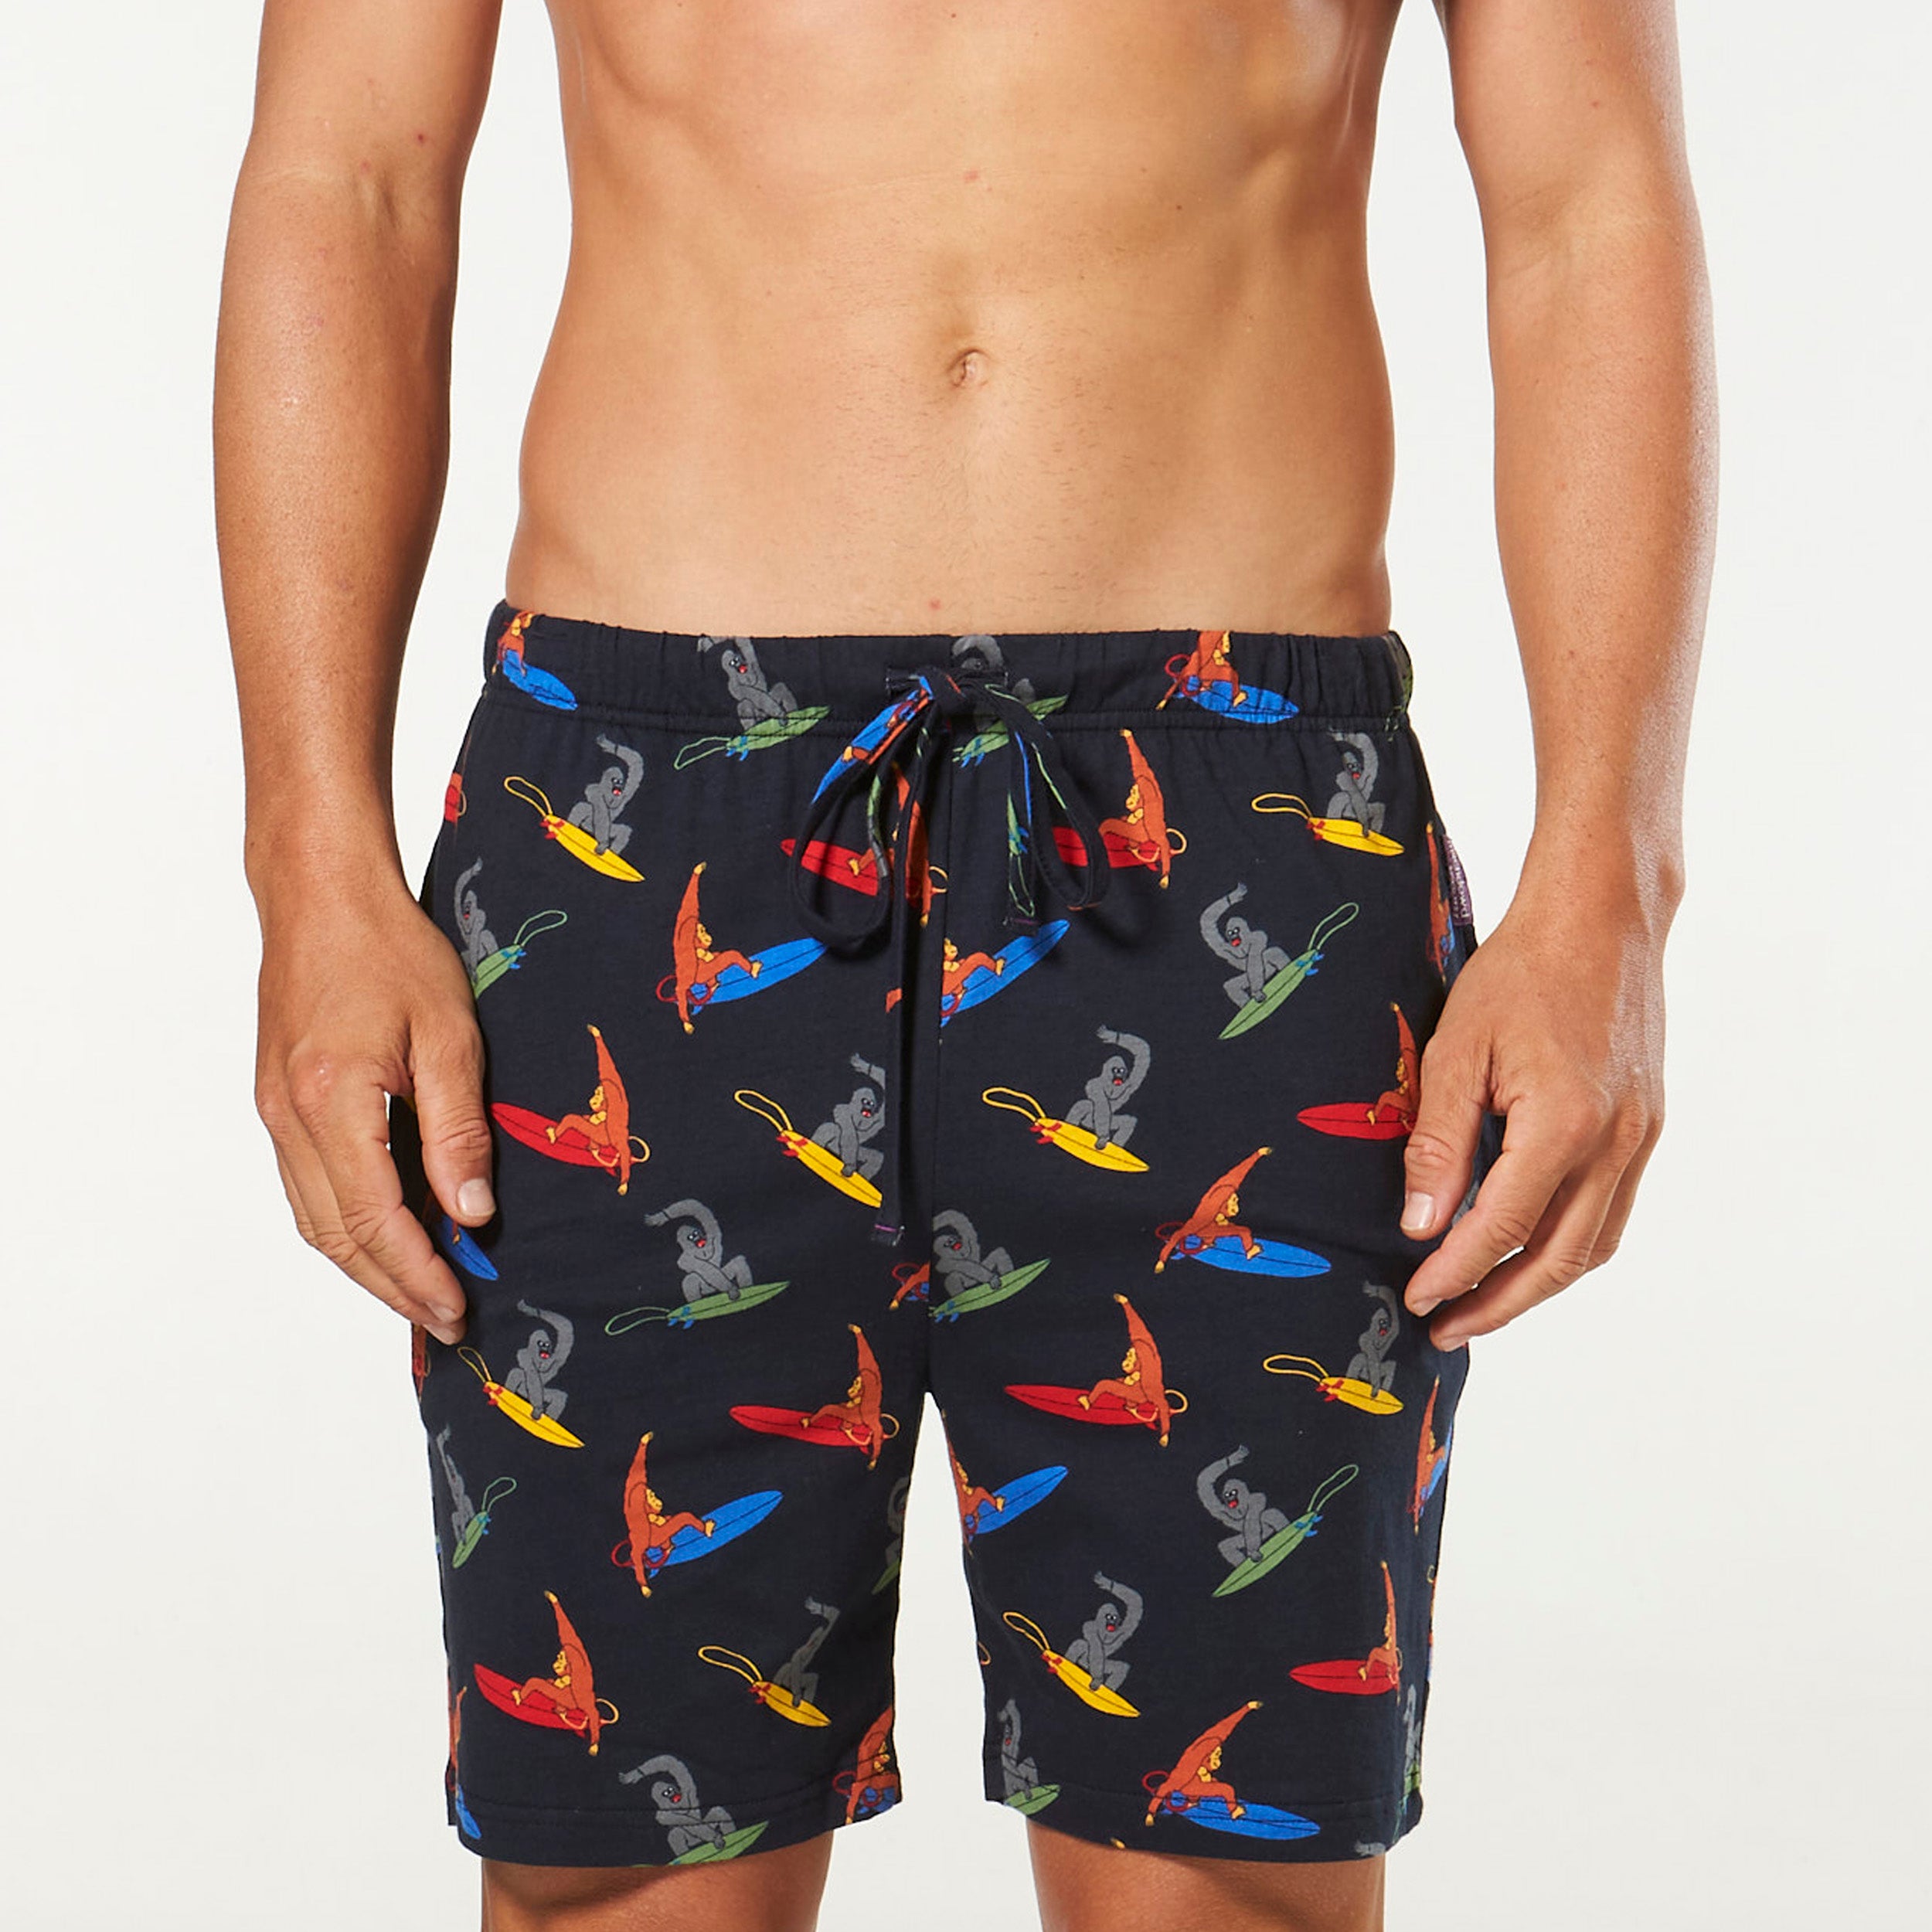 Men's Surfing Primates Cotton Printed Knit Pyjama Shorts  g 